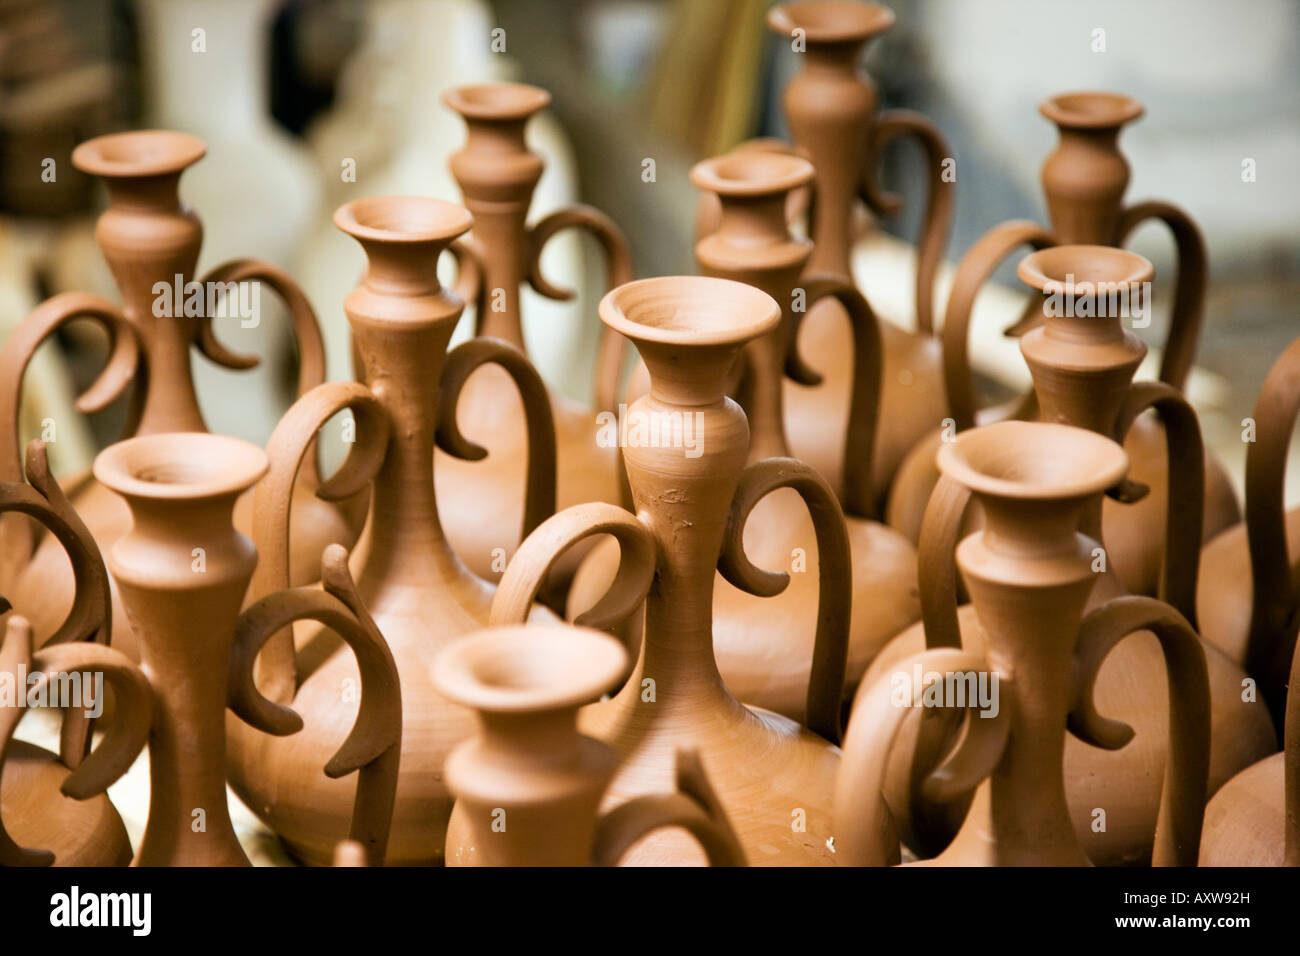 Atelier de poterie, Avanos, Cappadoce, Turquie Banque D'Images